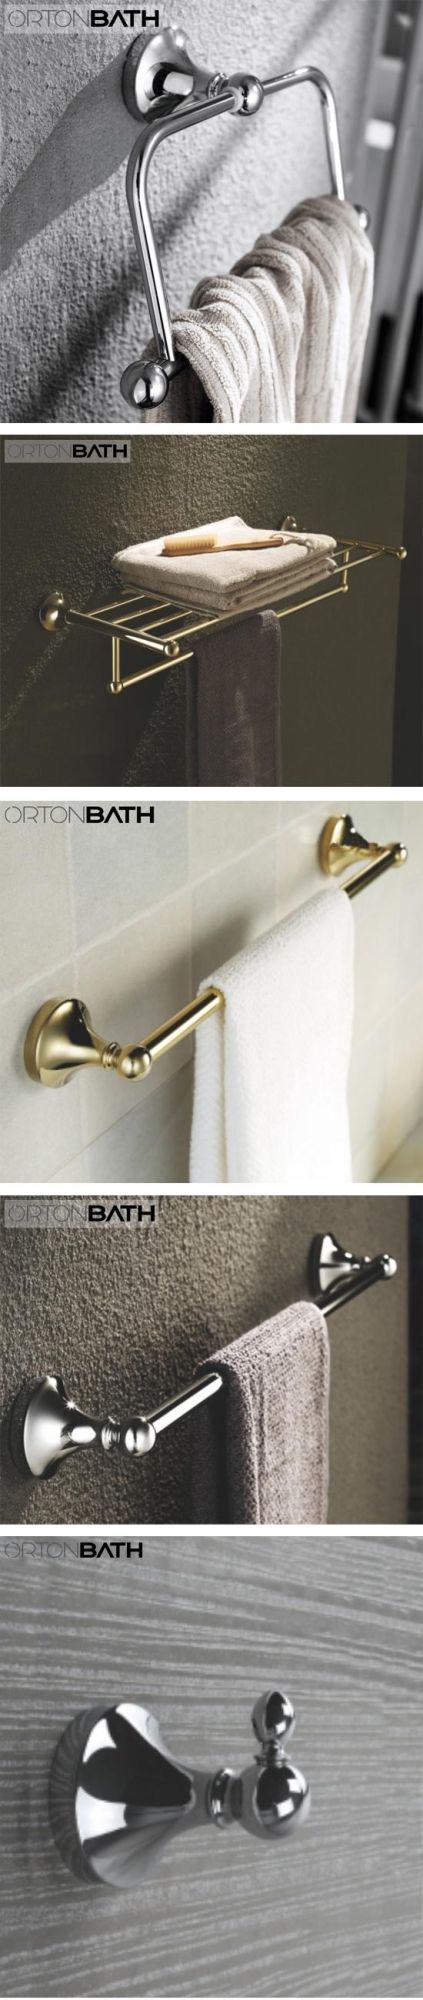 Ortonbath Bathroom Hardware Polished Chrome Include Towel Bar Towel Holder Toilet Paper Holder Towel Hook, 5 Pieces Soap Dispenser Bathroom Accessories